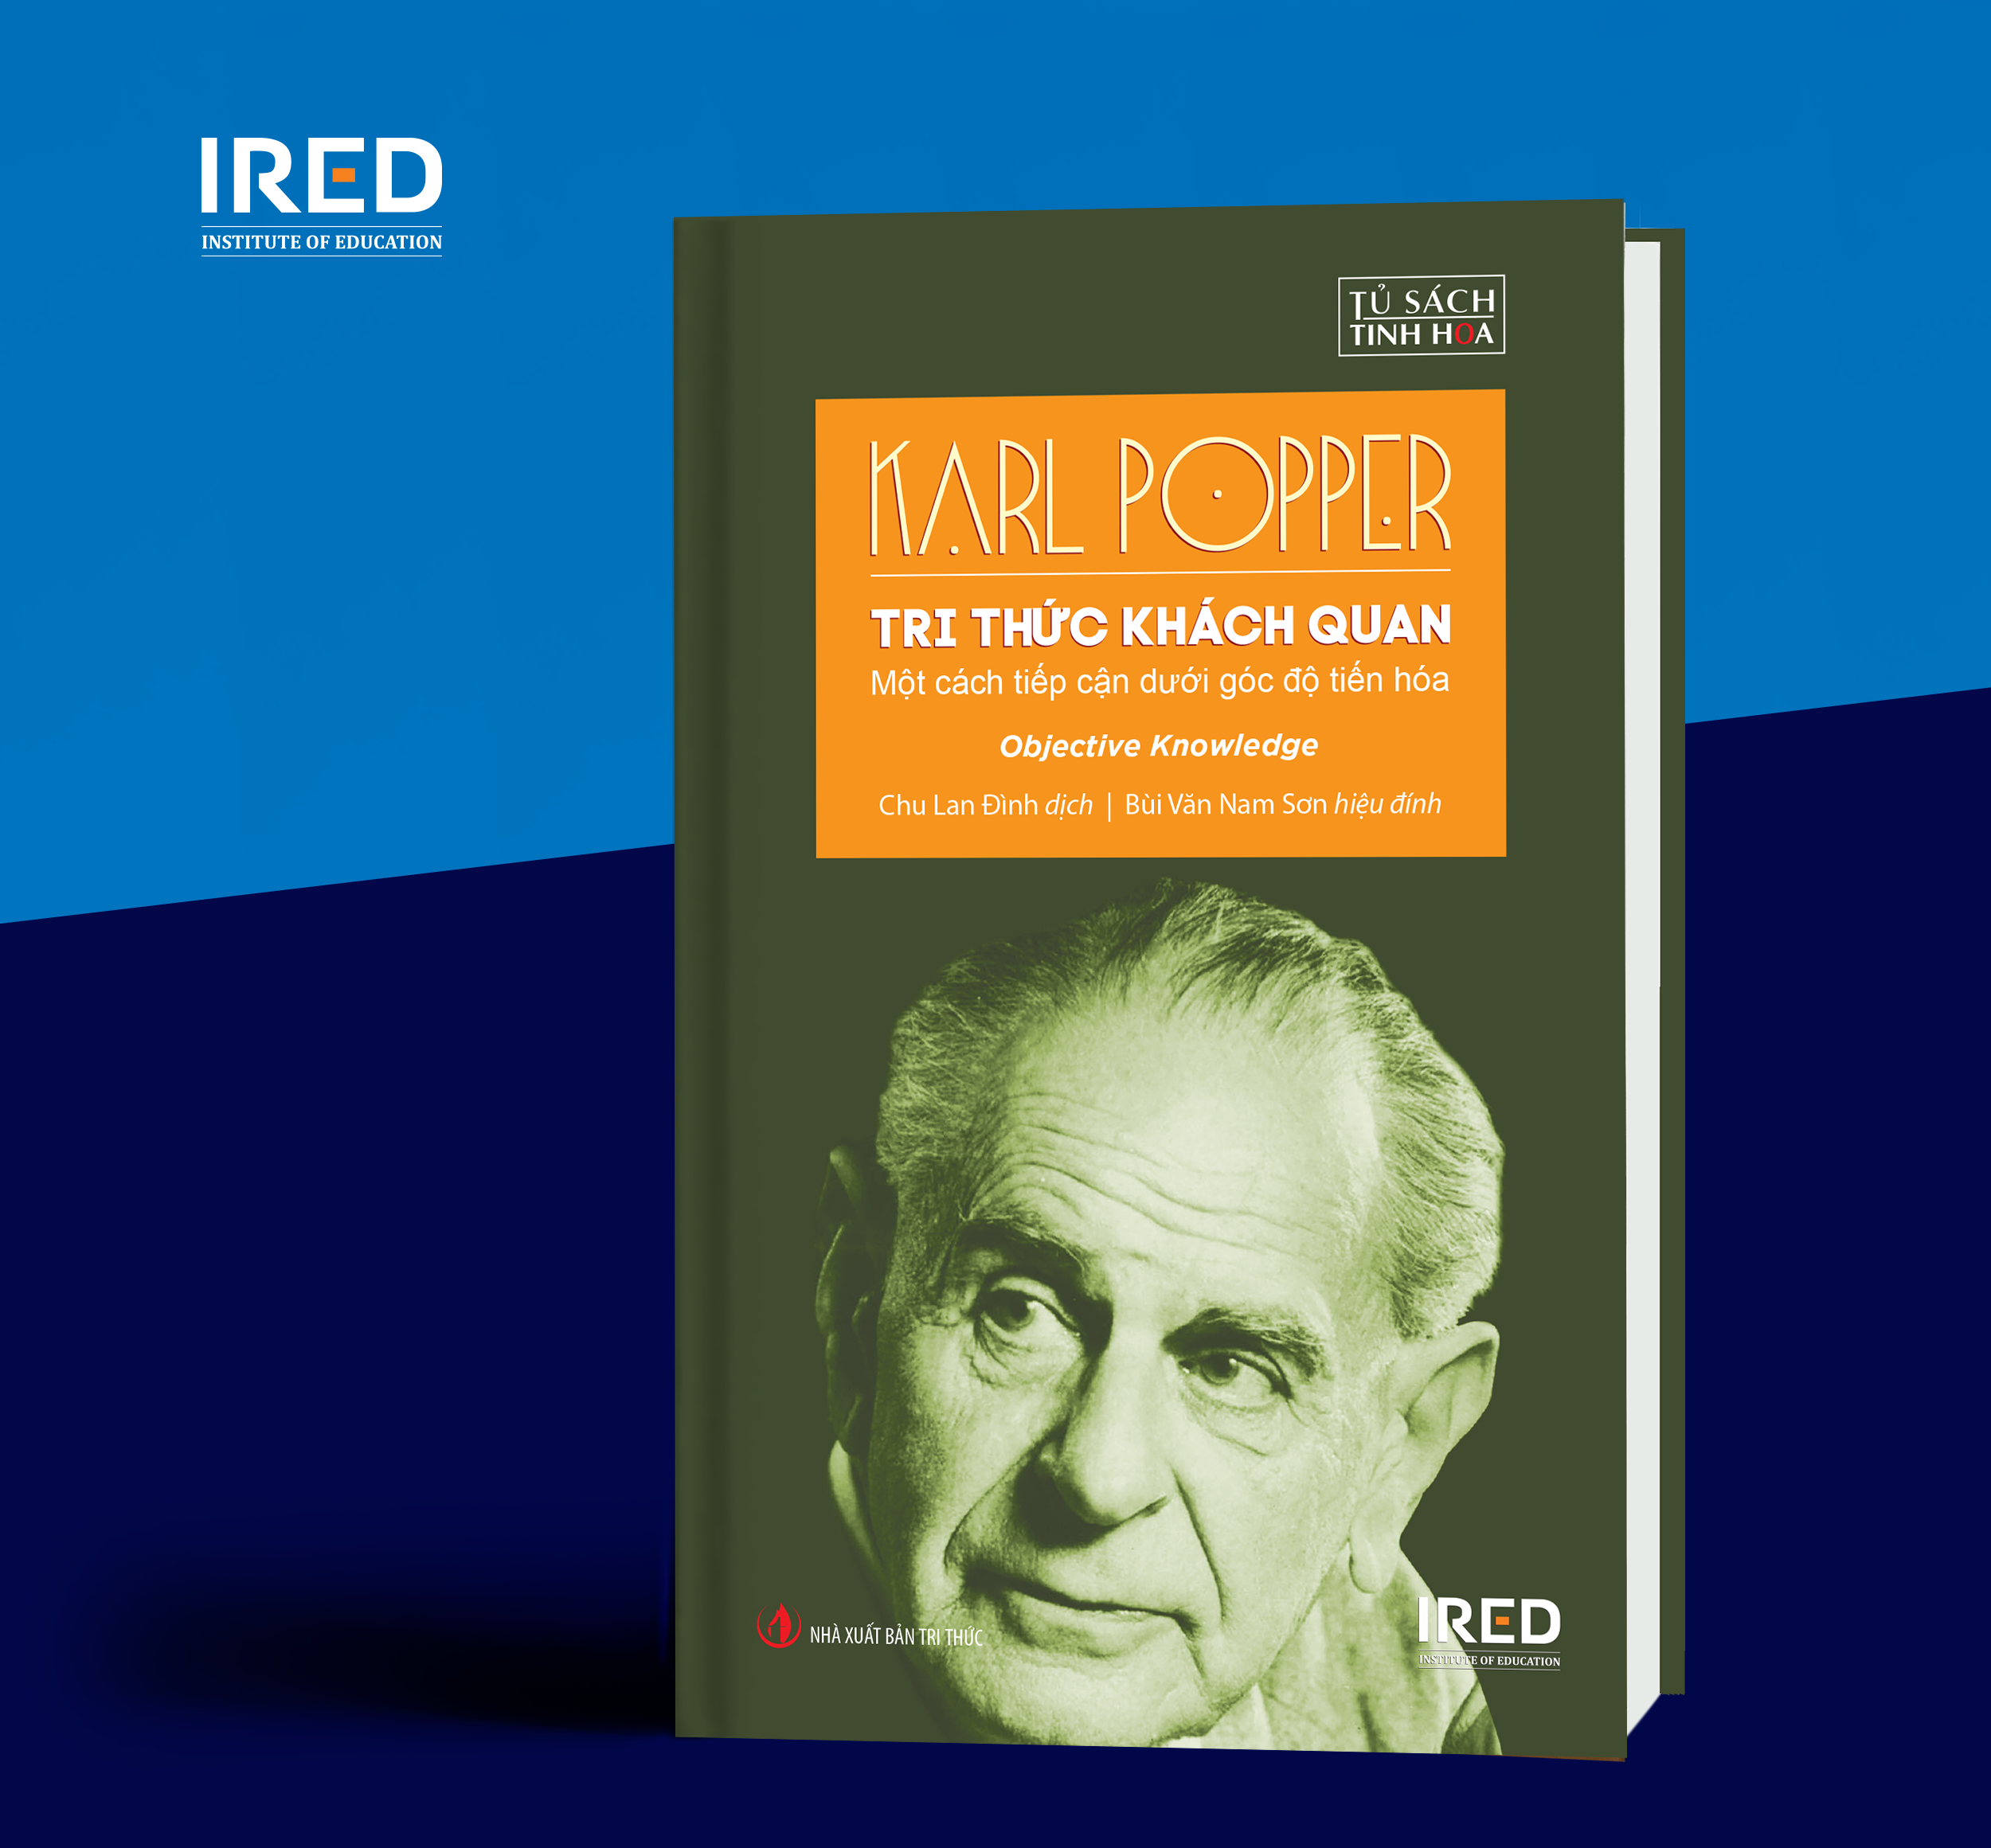 Tri Thức Khách Quan (Objective Knowledge) - Karl Popper - IRED Books